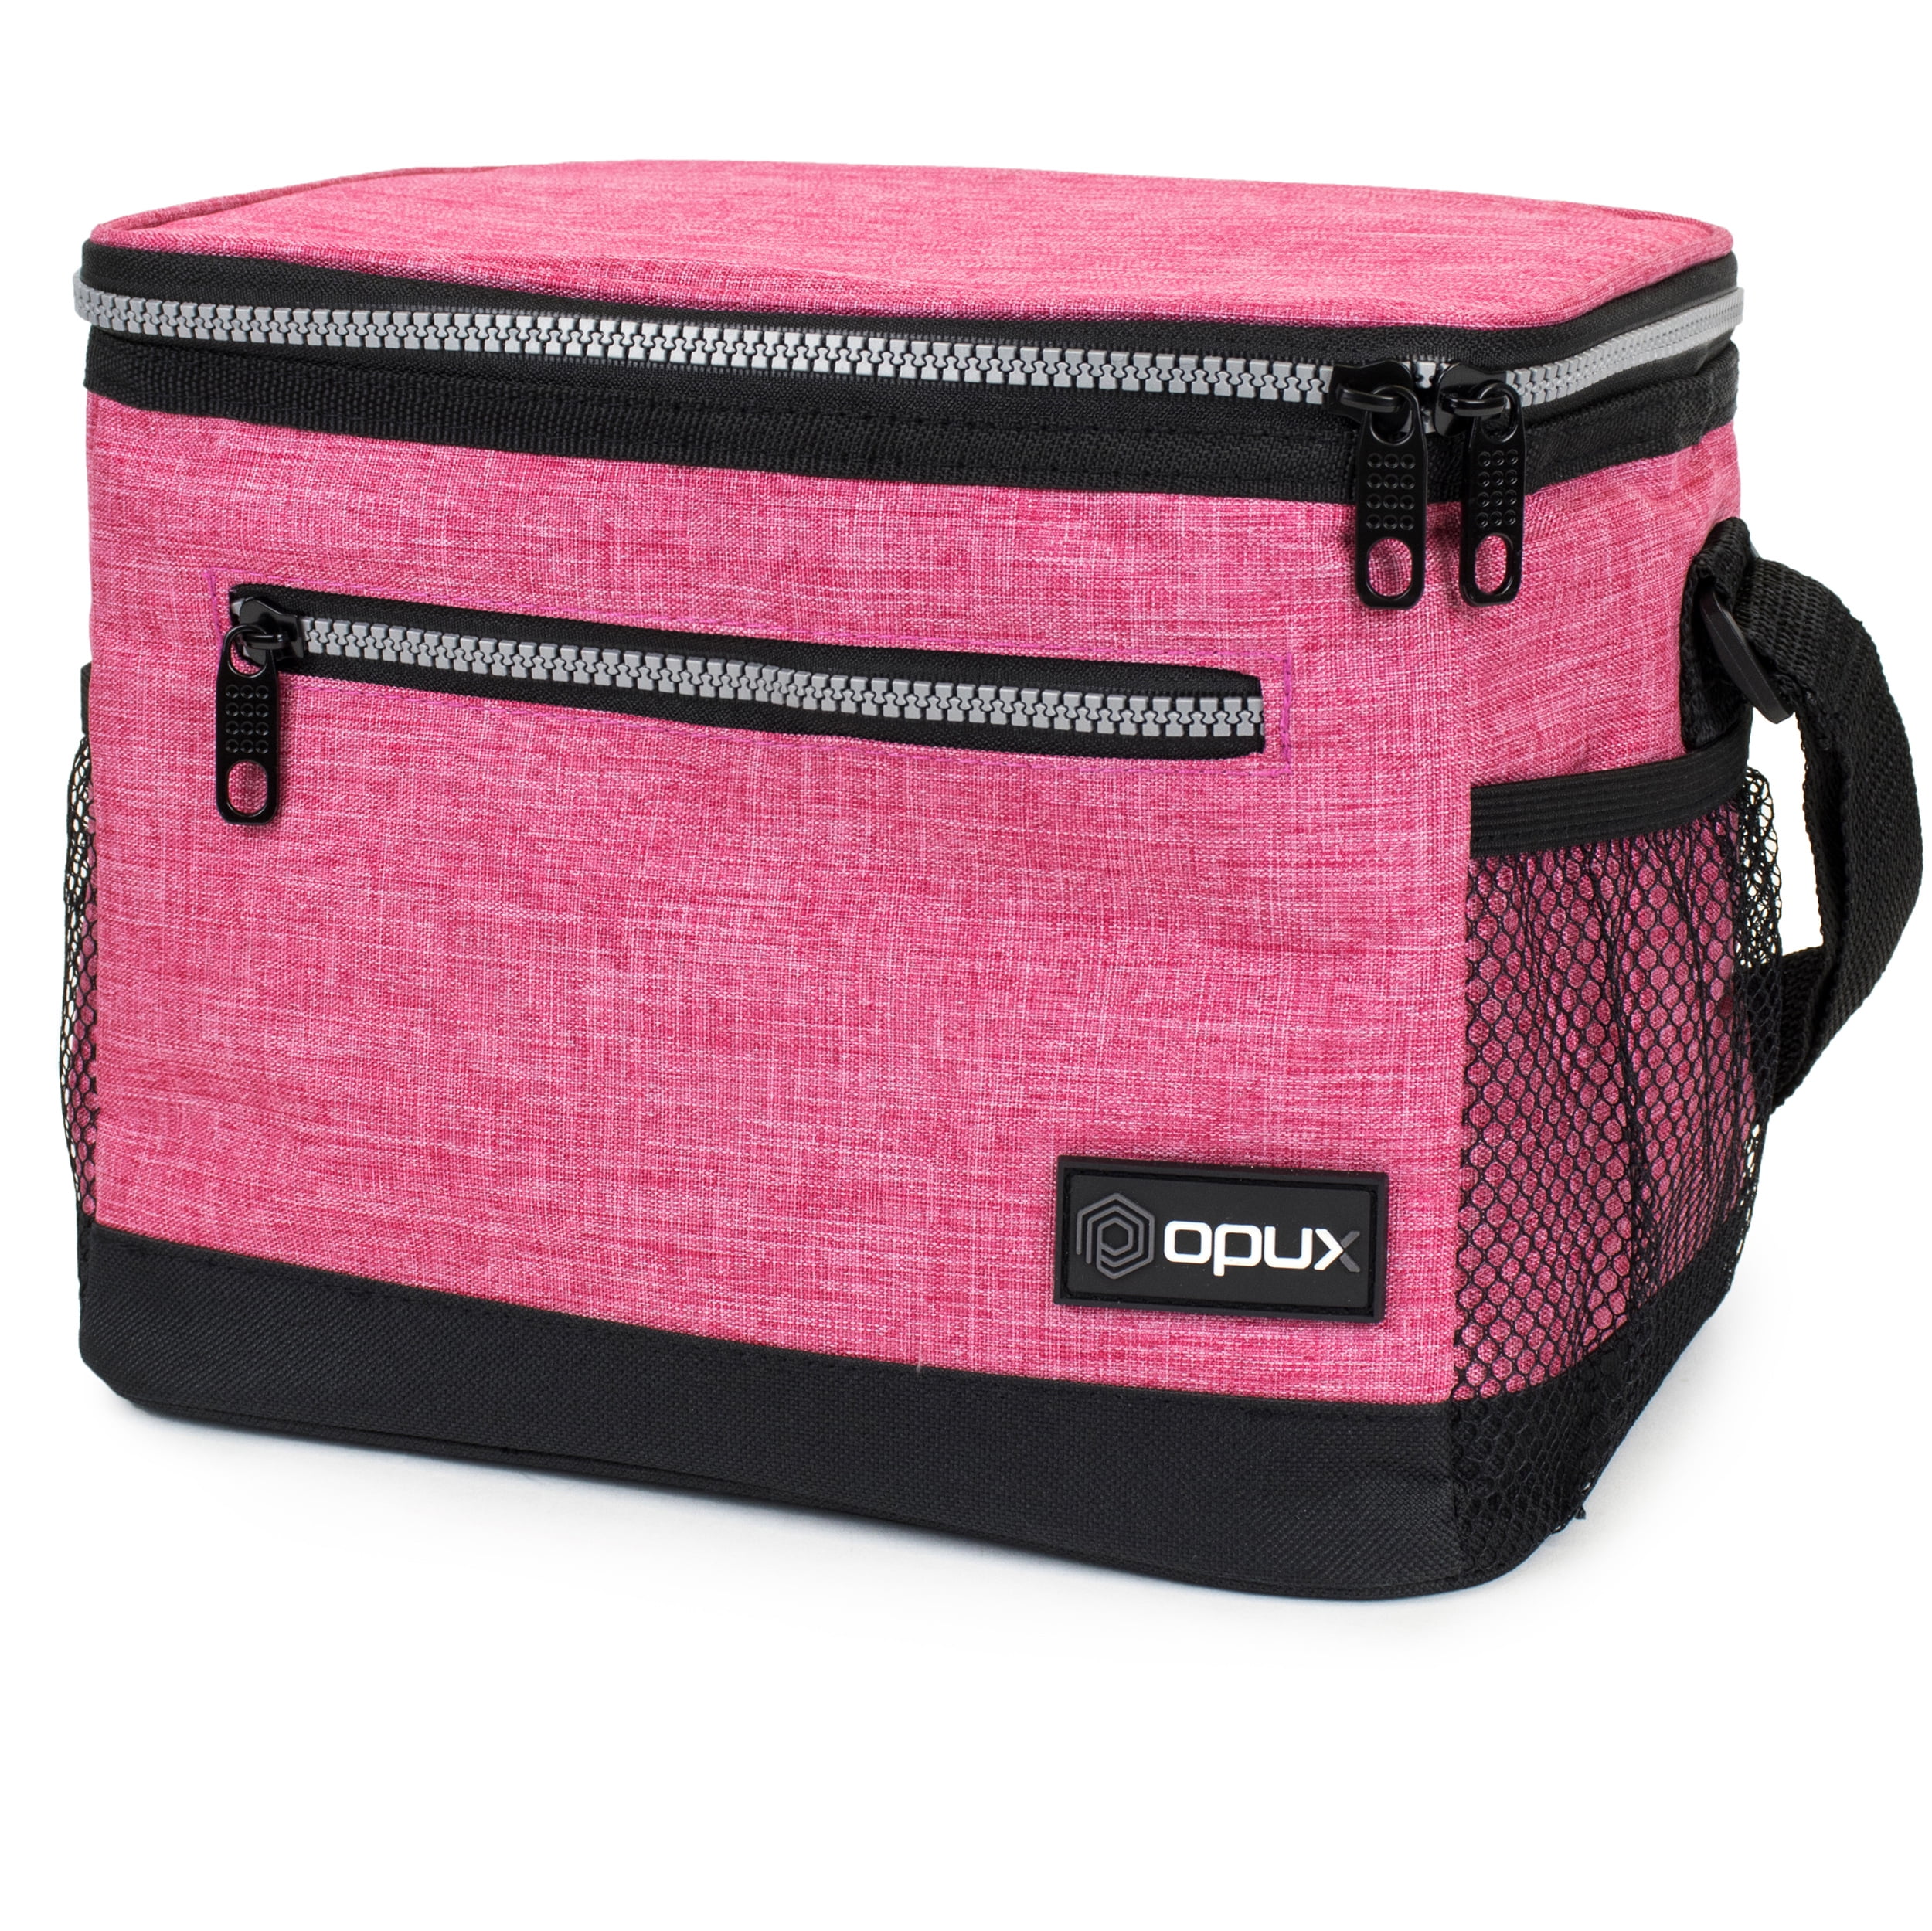 Cute Pink Pig Lunch Box Insulated Lunch Bags Zipper Lunch Bag Cooler Tote  Bag For Teens Girls Boys Men Women Office Picnic - AliExpress